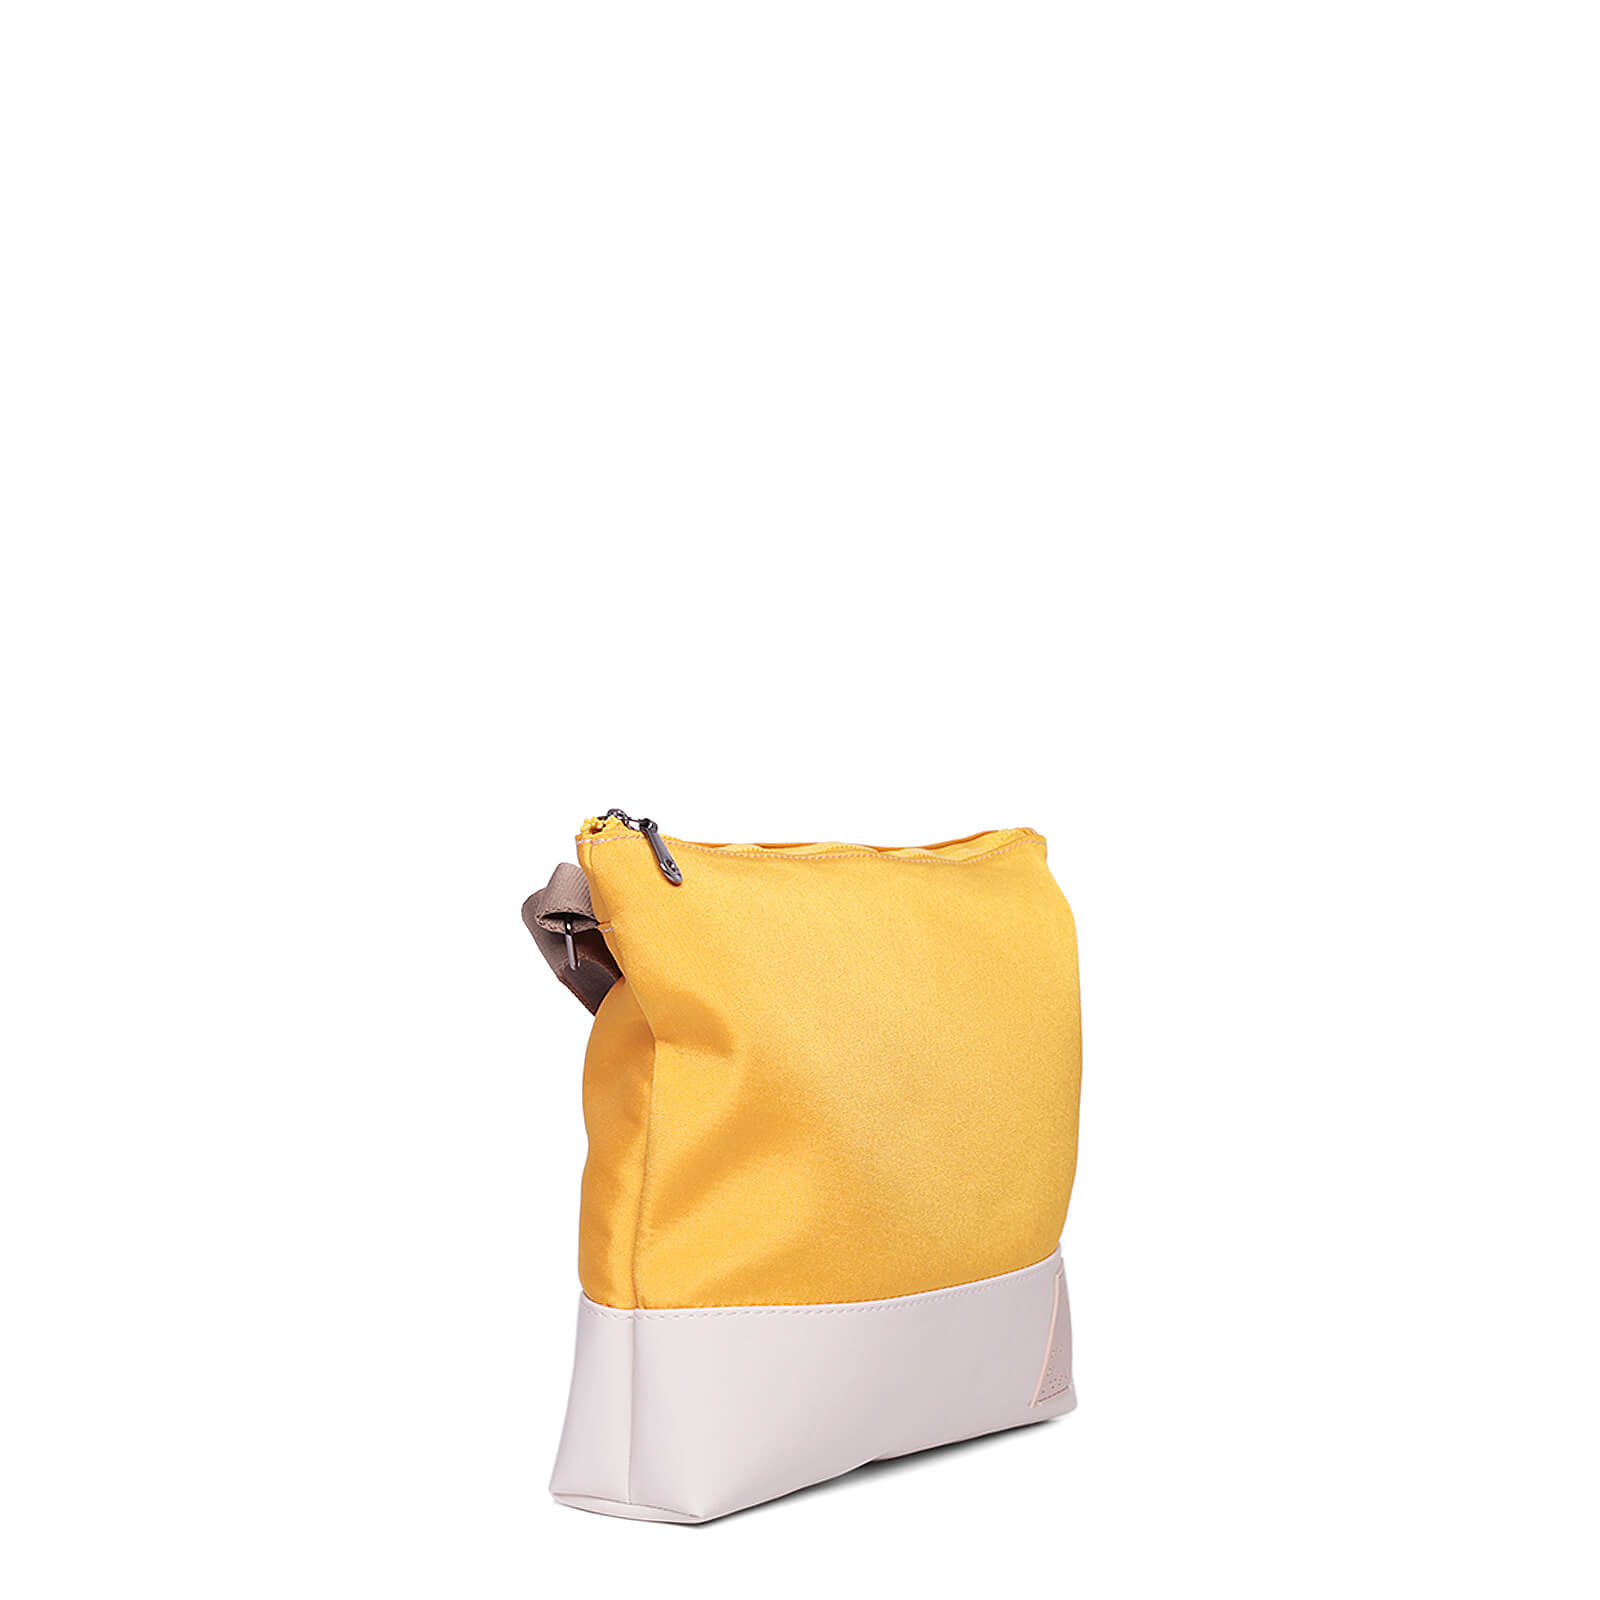 bolsa-tiracolo-nylon-emb-61114-unclek-amarelo-off-white-2